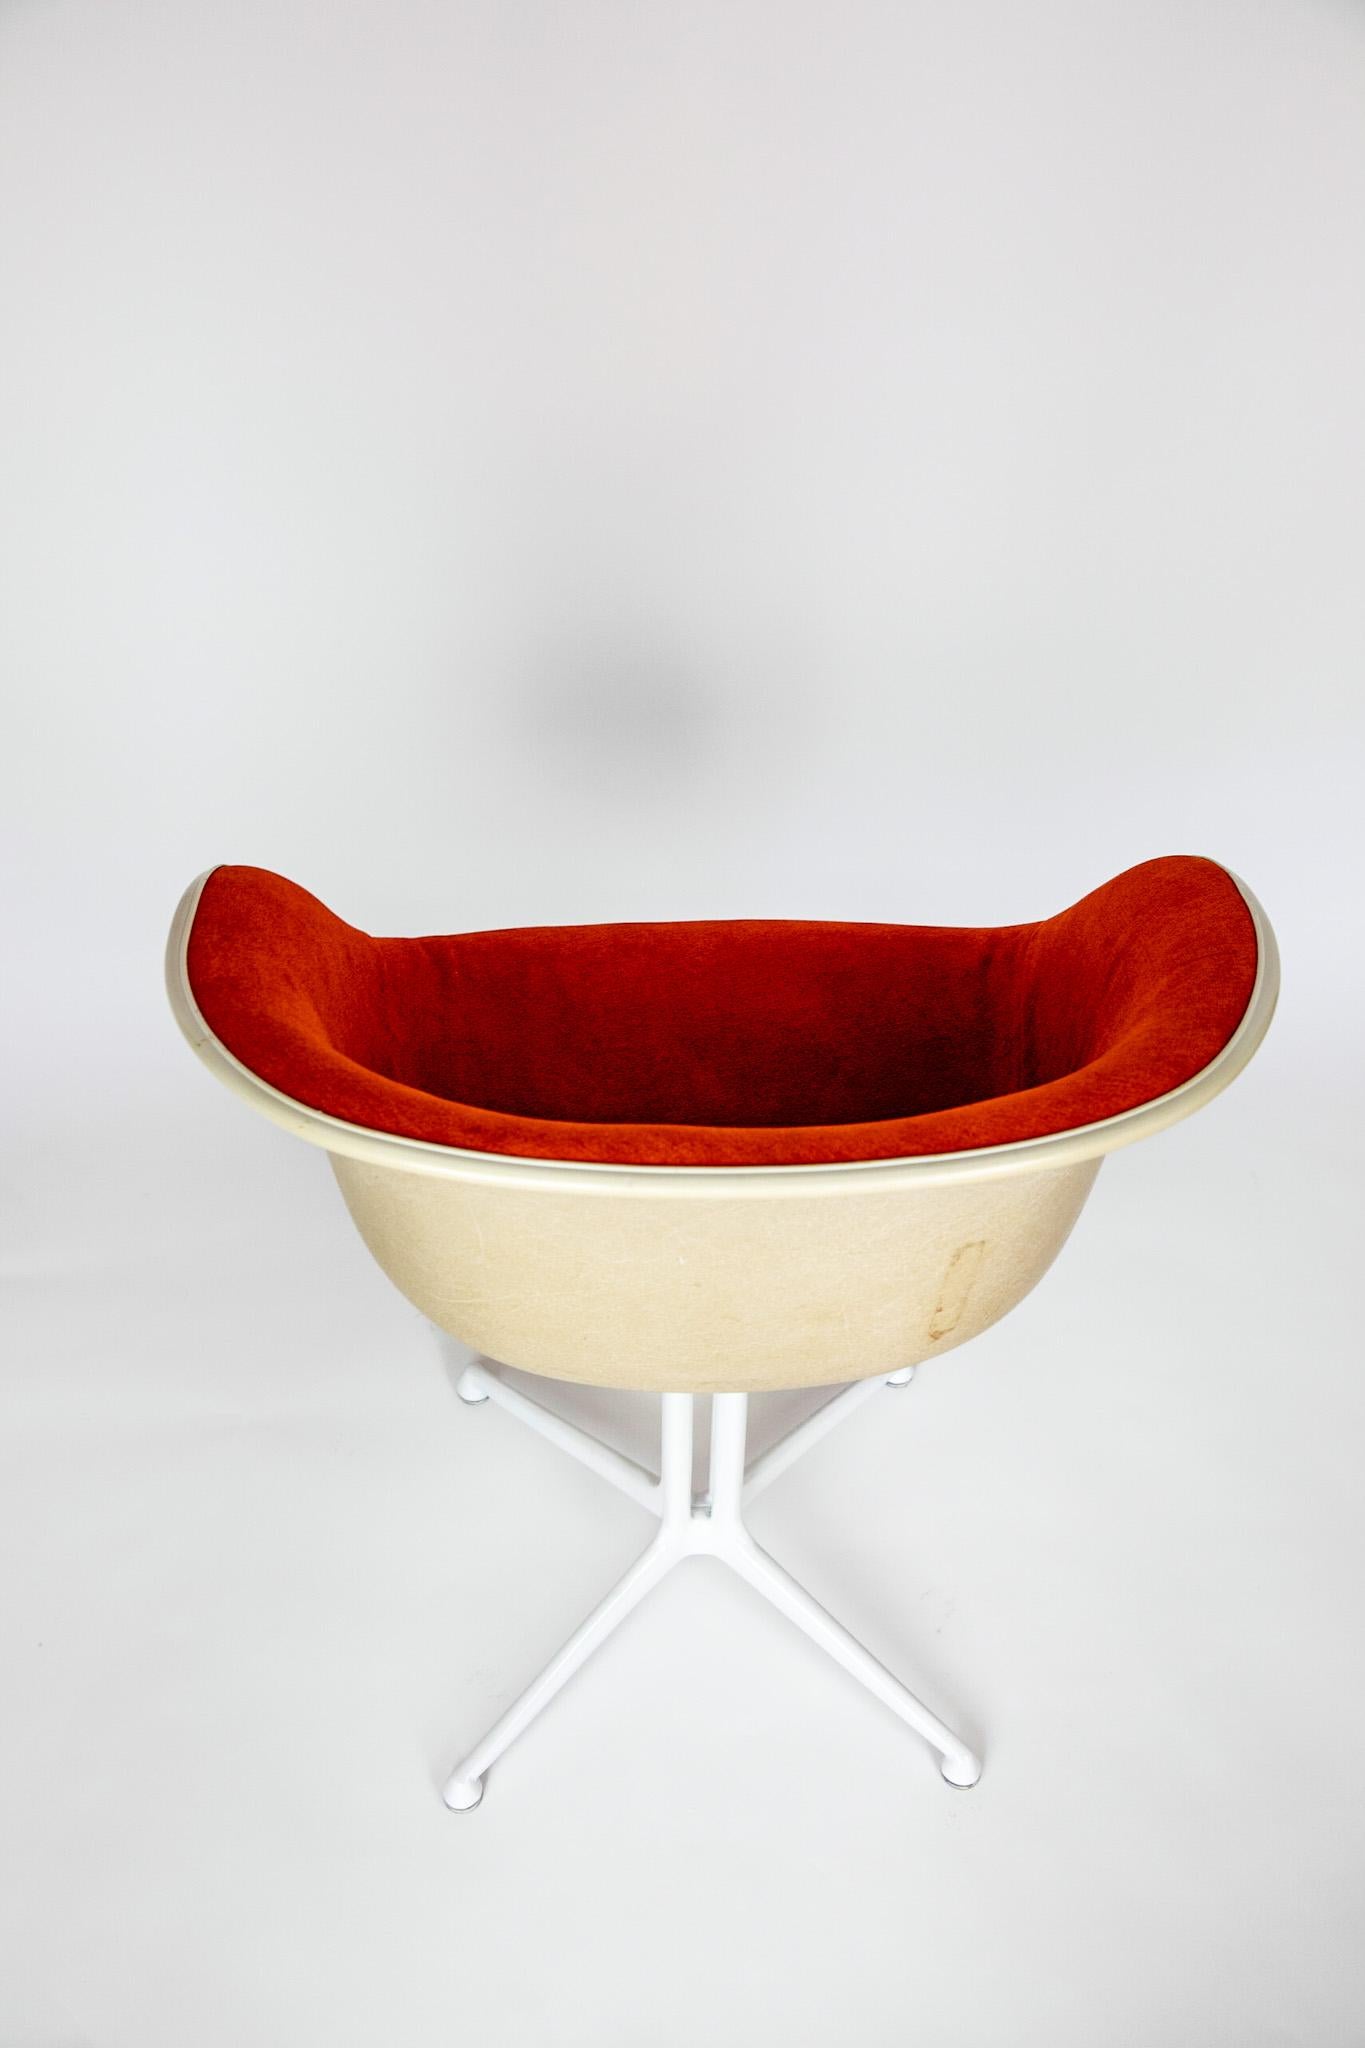 Aluminum Mid-Century Modern Fibreglass Dining Chair La Fonda by Eames for Vitra, 1960s